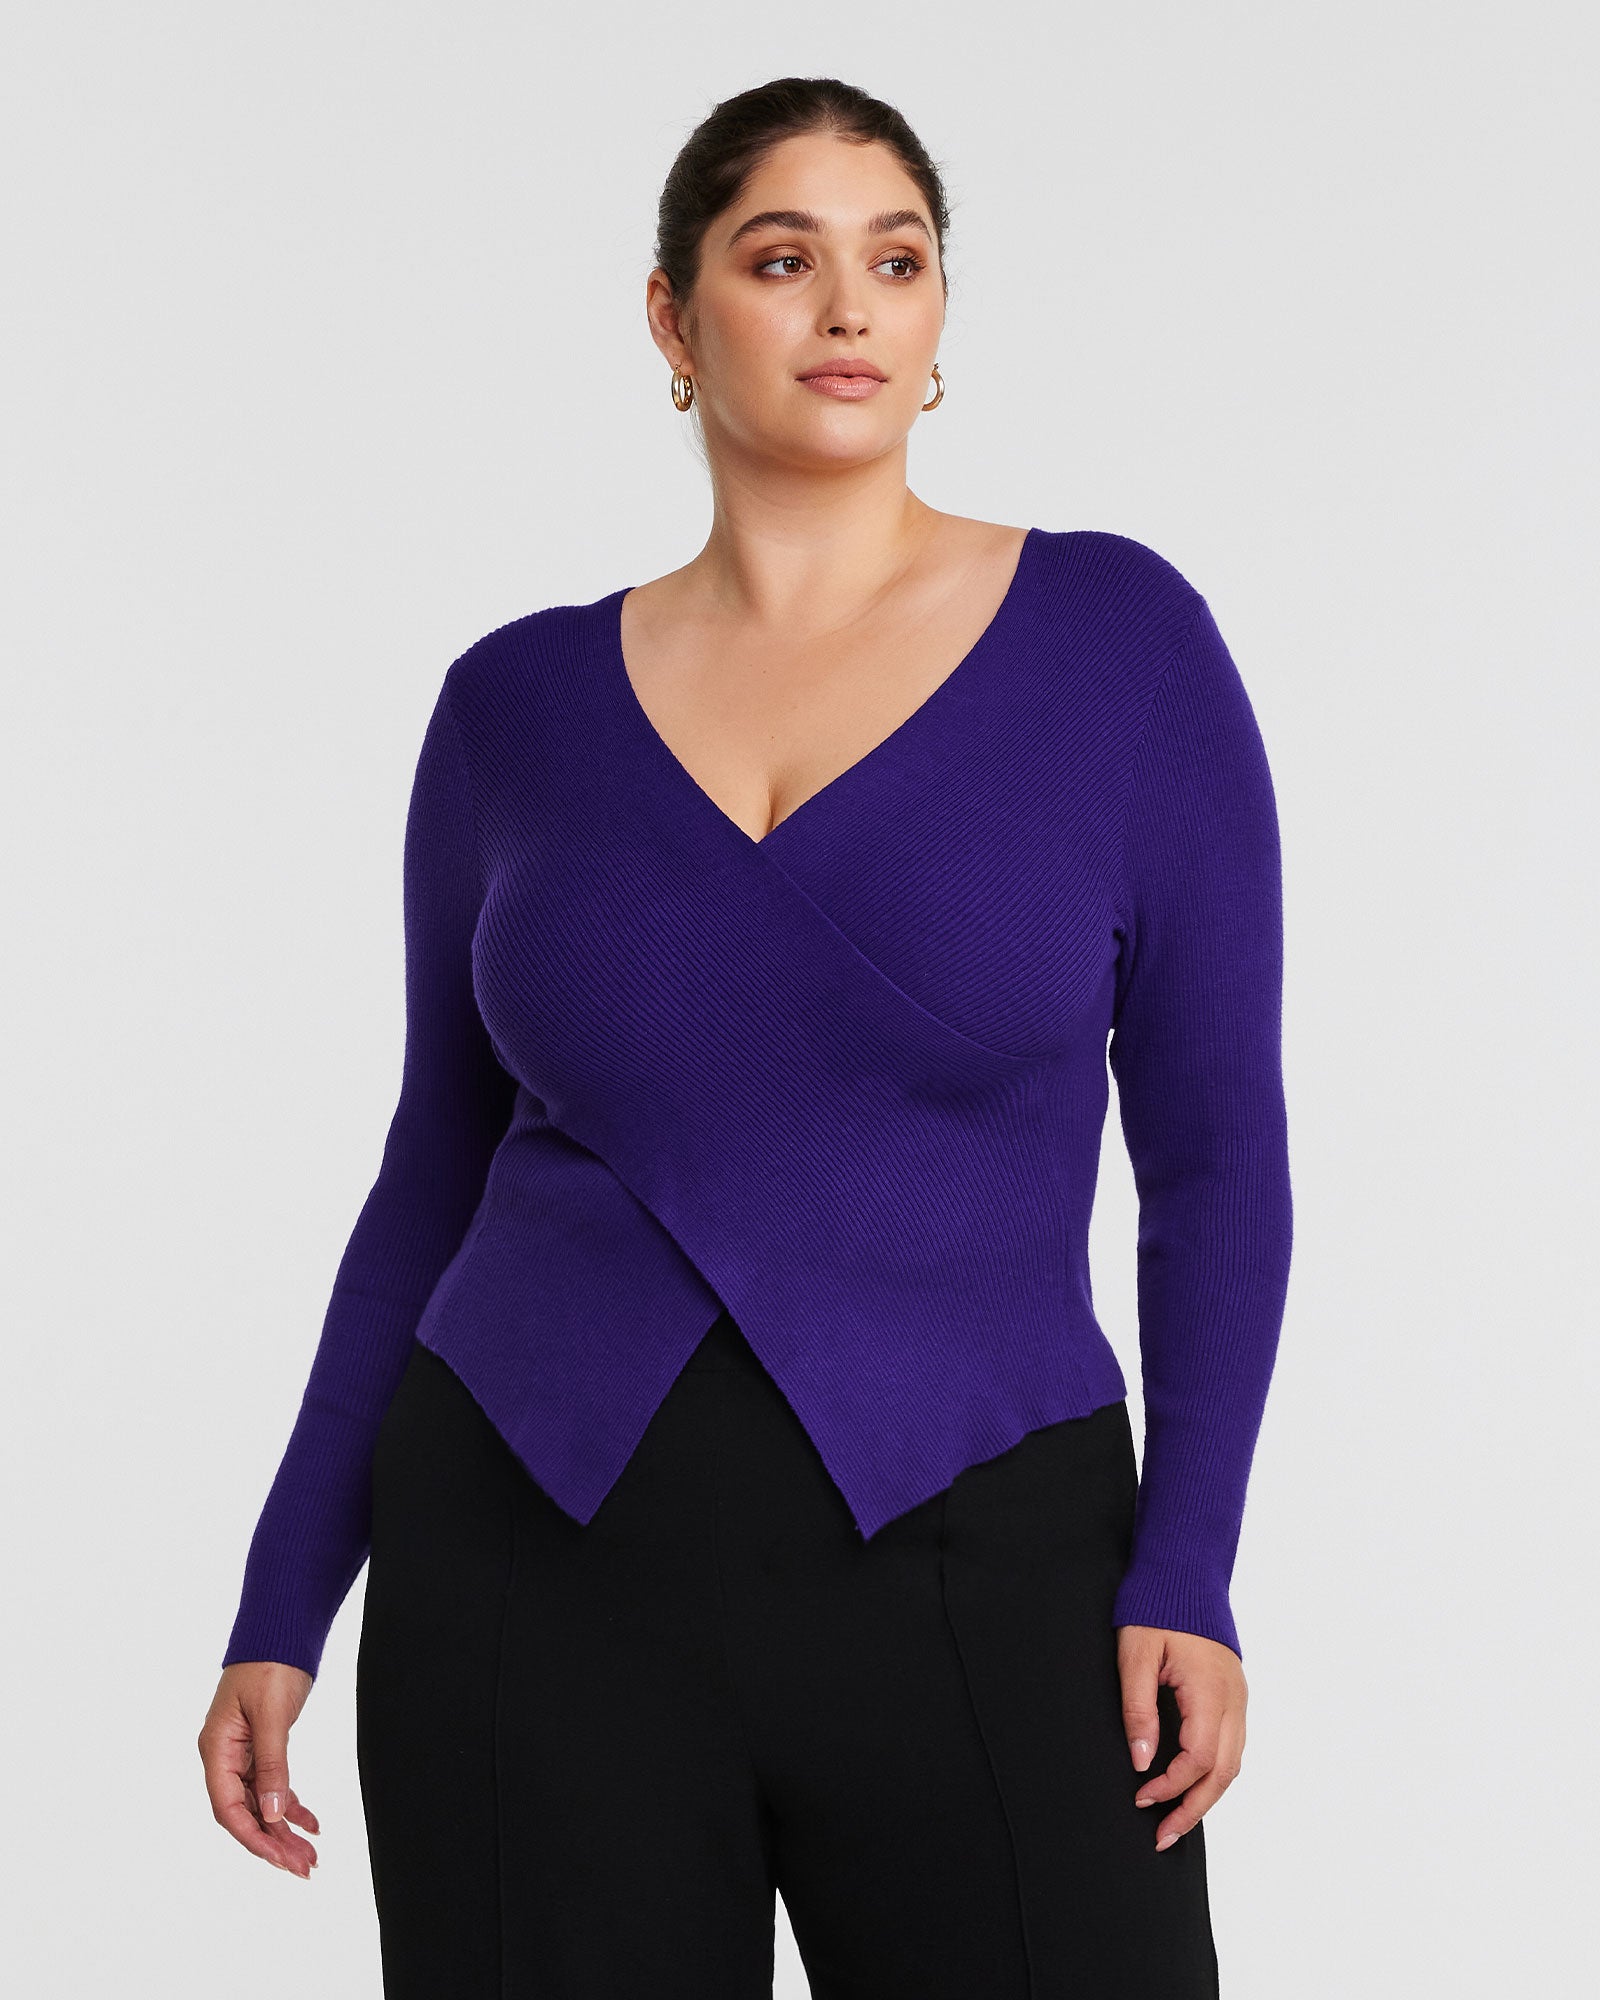 A woman wearing Estelle's Purple Wrap It Up Long Sleeve Knit Sweater and black pants.